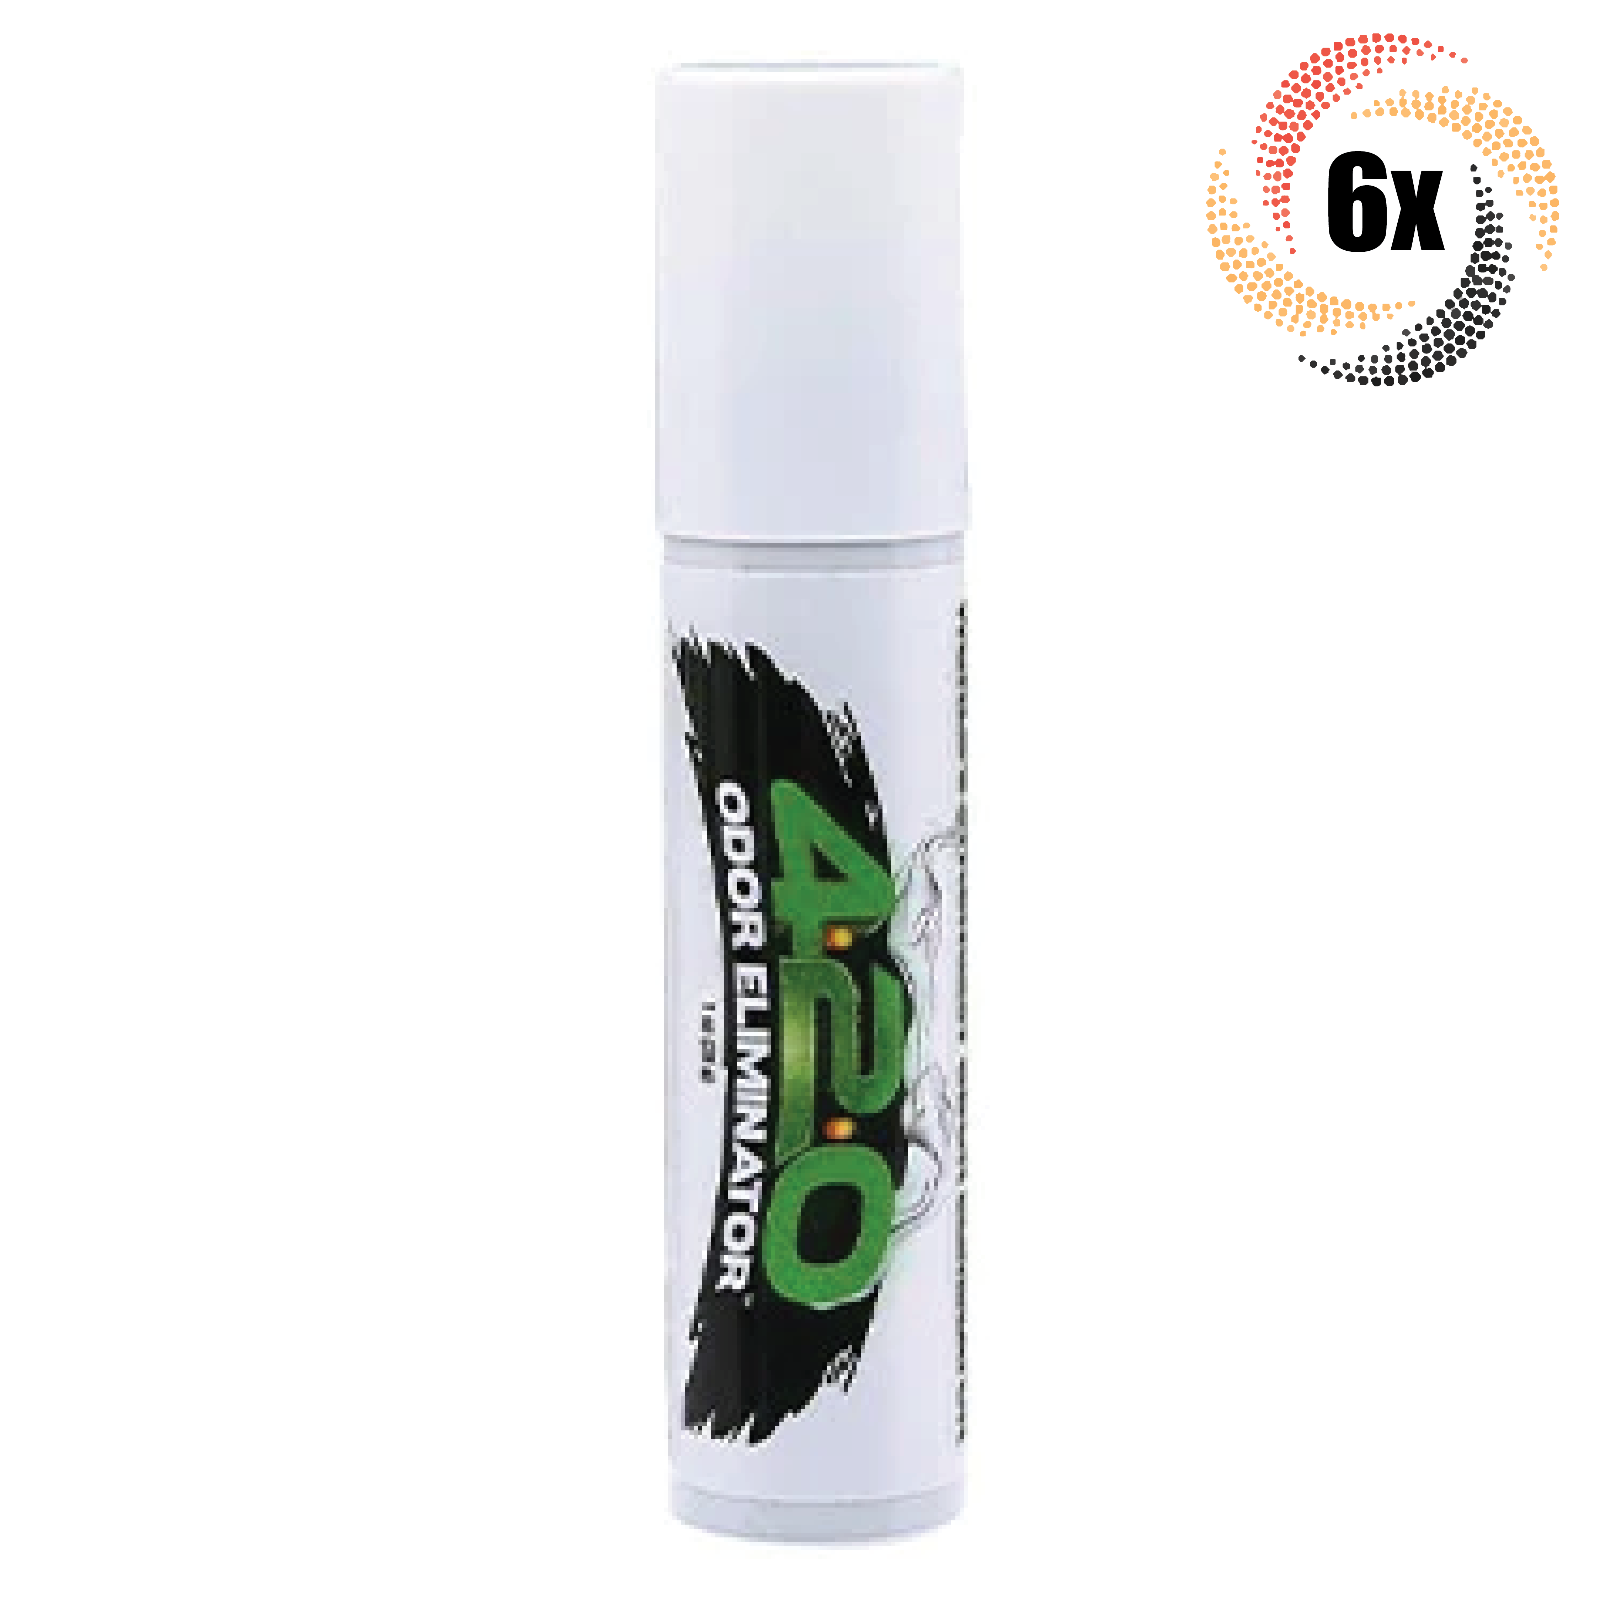 6x Sprays 420 OG Green Odor Eliminator Spray 1oz | World's Strongest Eliminator! - $30.84